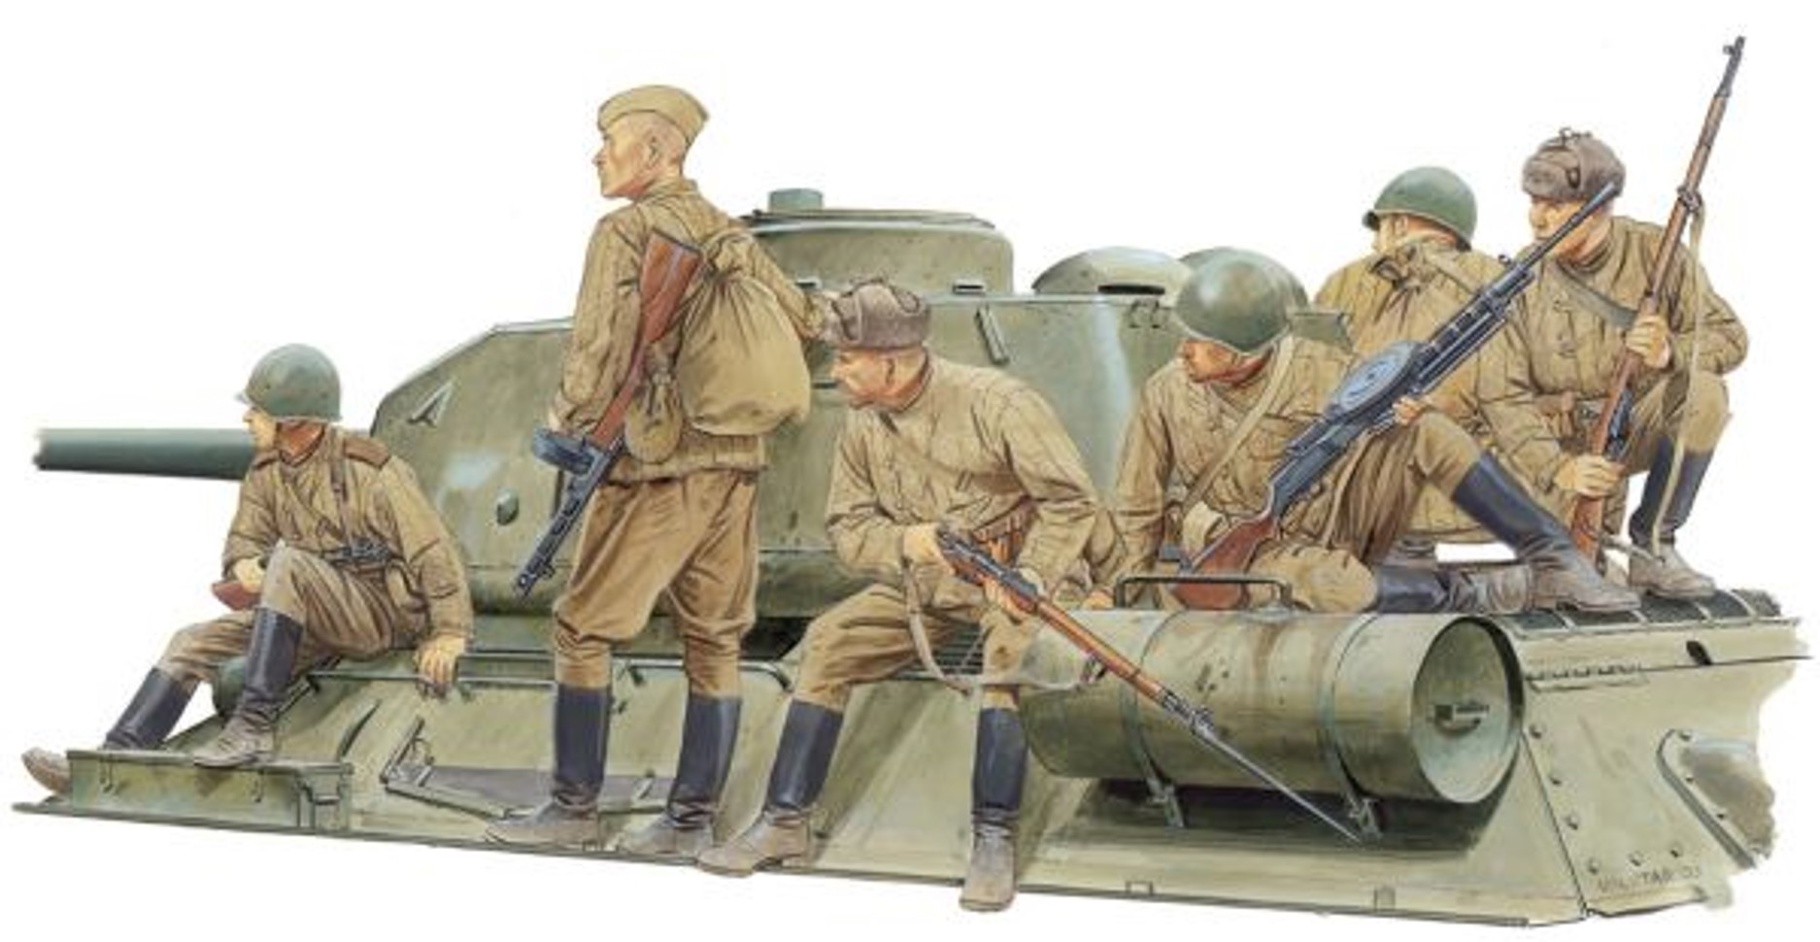 Dragon 1/35 Soviet WWII Tank Rider Infantry # 6197